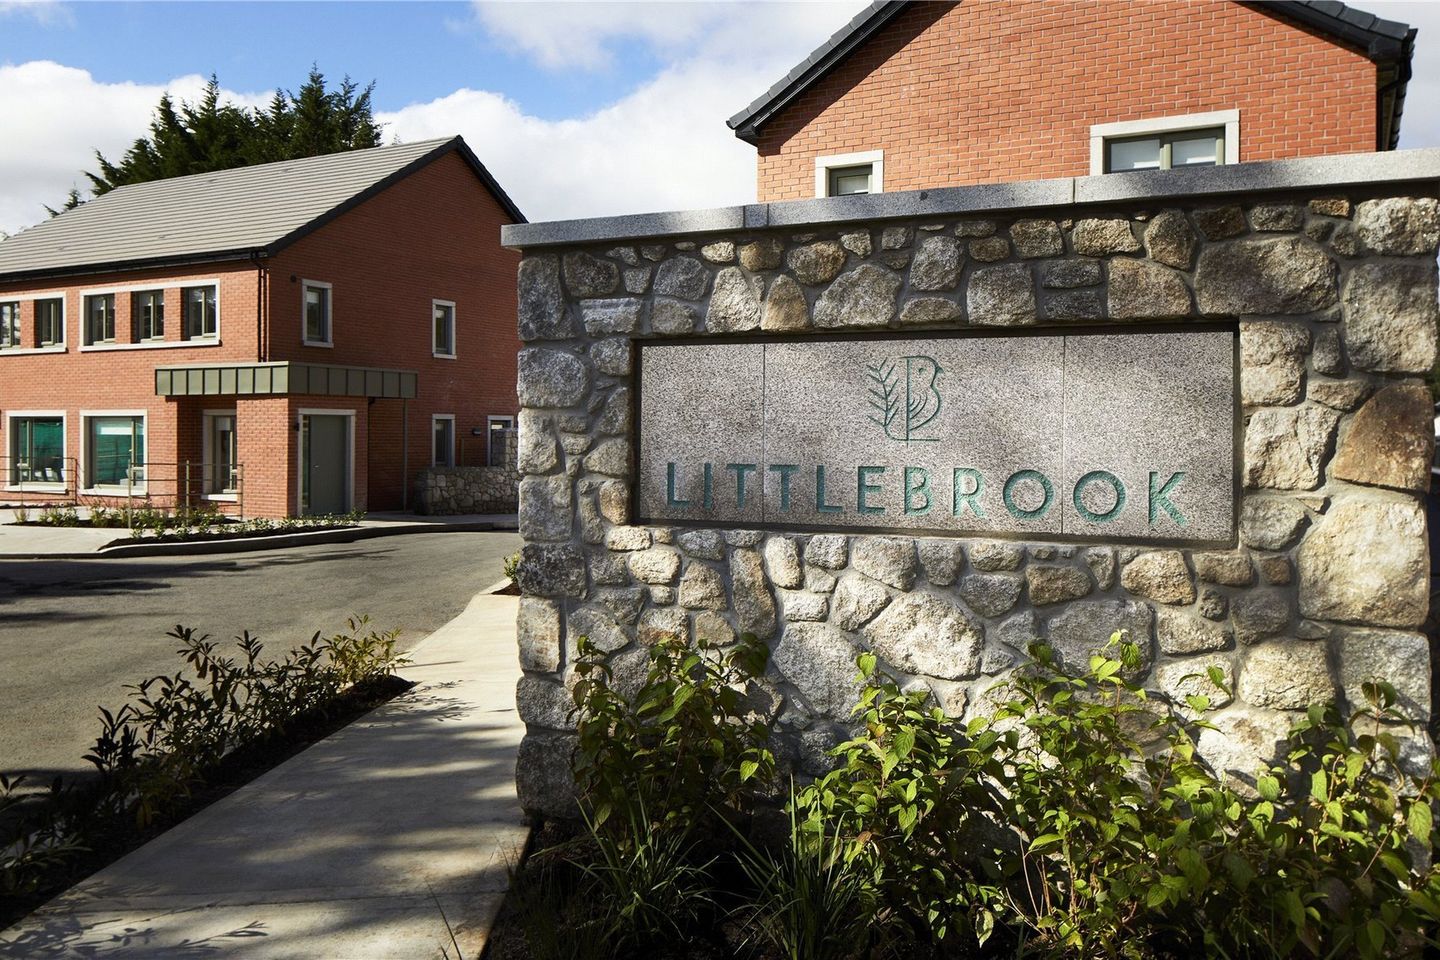 4 Bedroom Semi-Detached Littlebrook, Littlebrook, 4 Bedroom Semi-Detached Littlebrook, Chapel Road, Delgany, Co. Wicklow